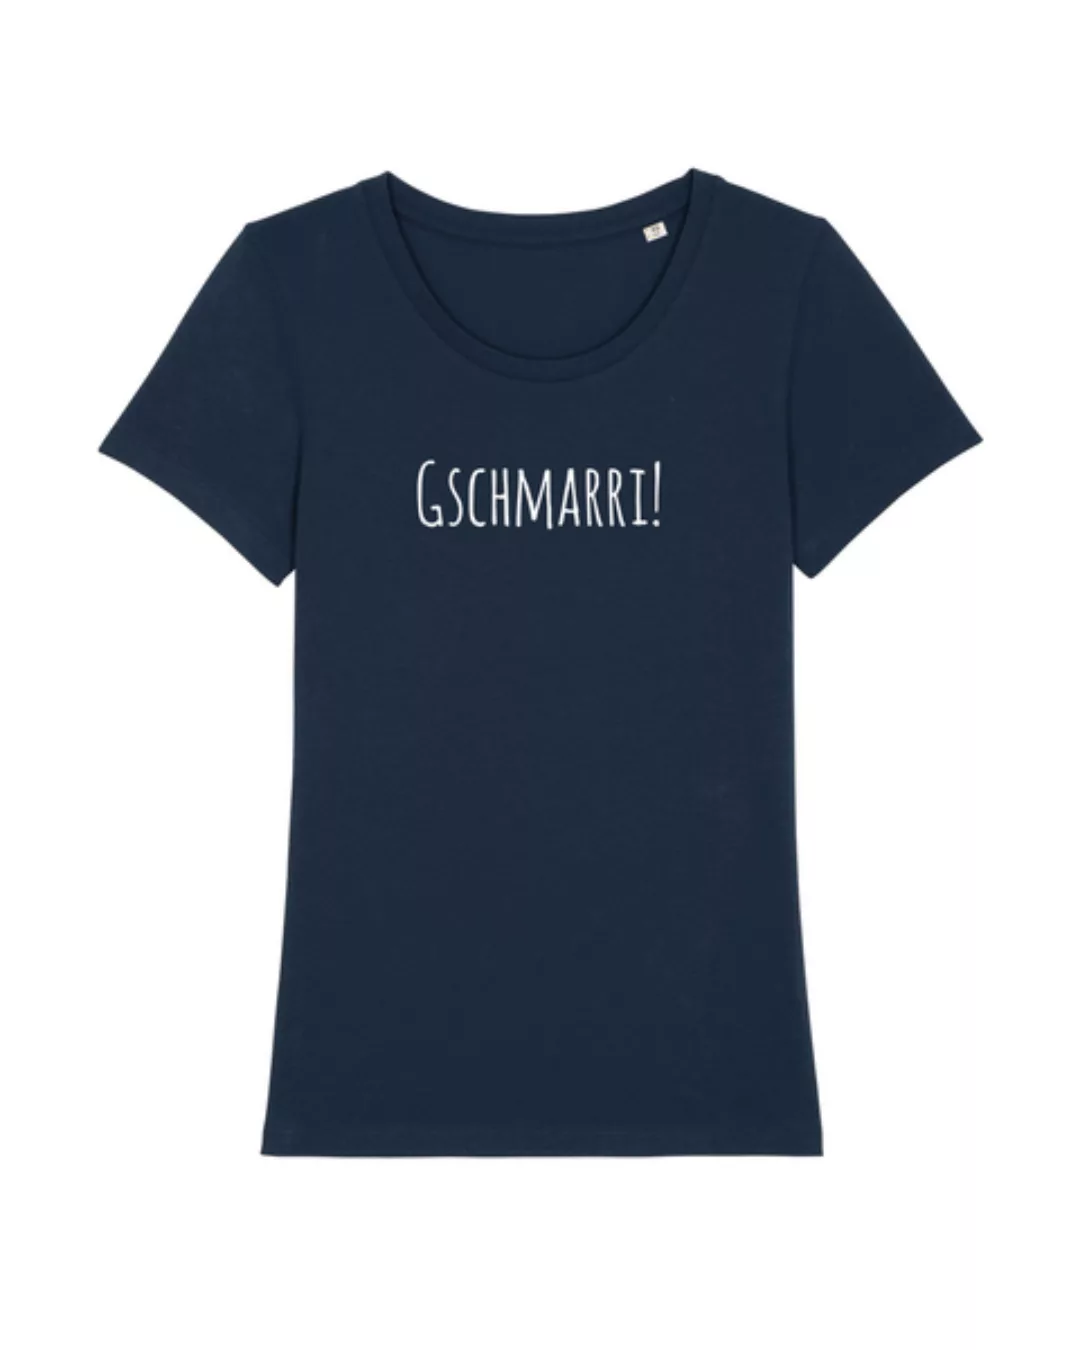 Gschmarri | T-shirt Damen günstig online kaufen